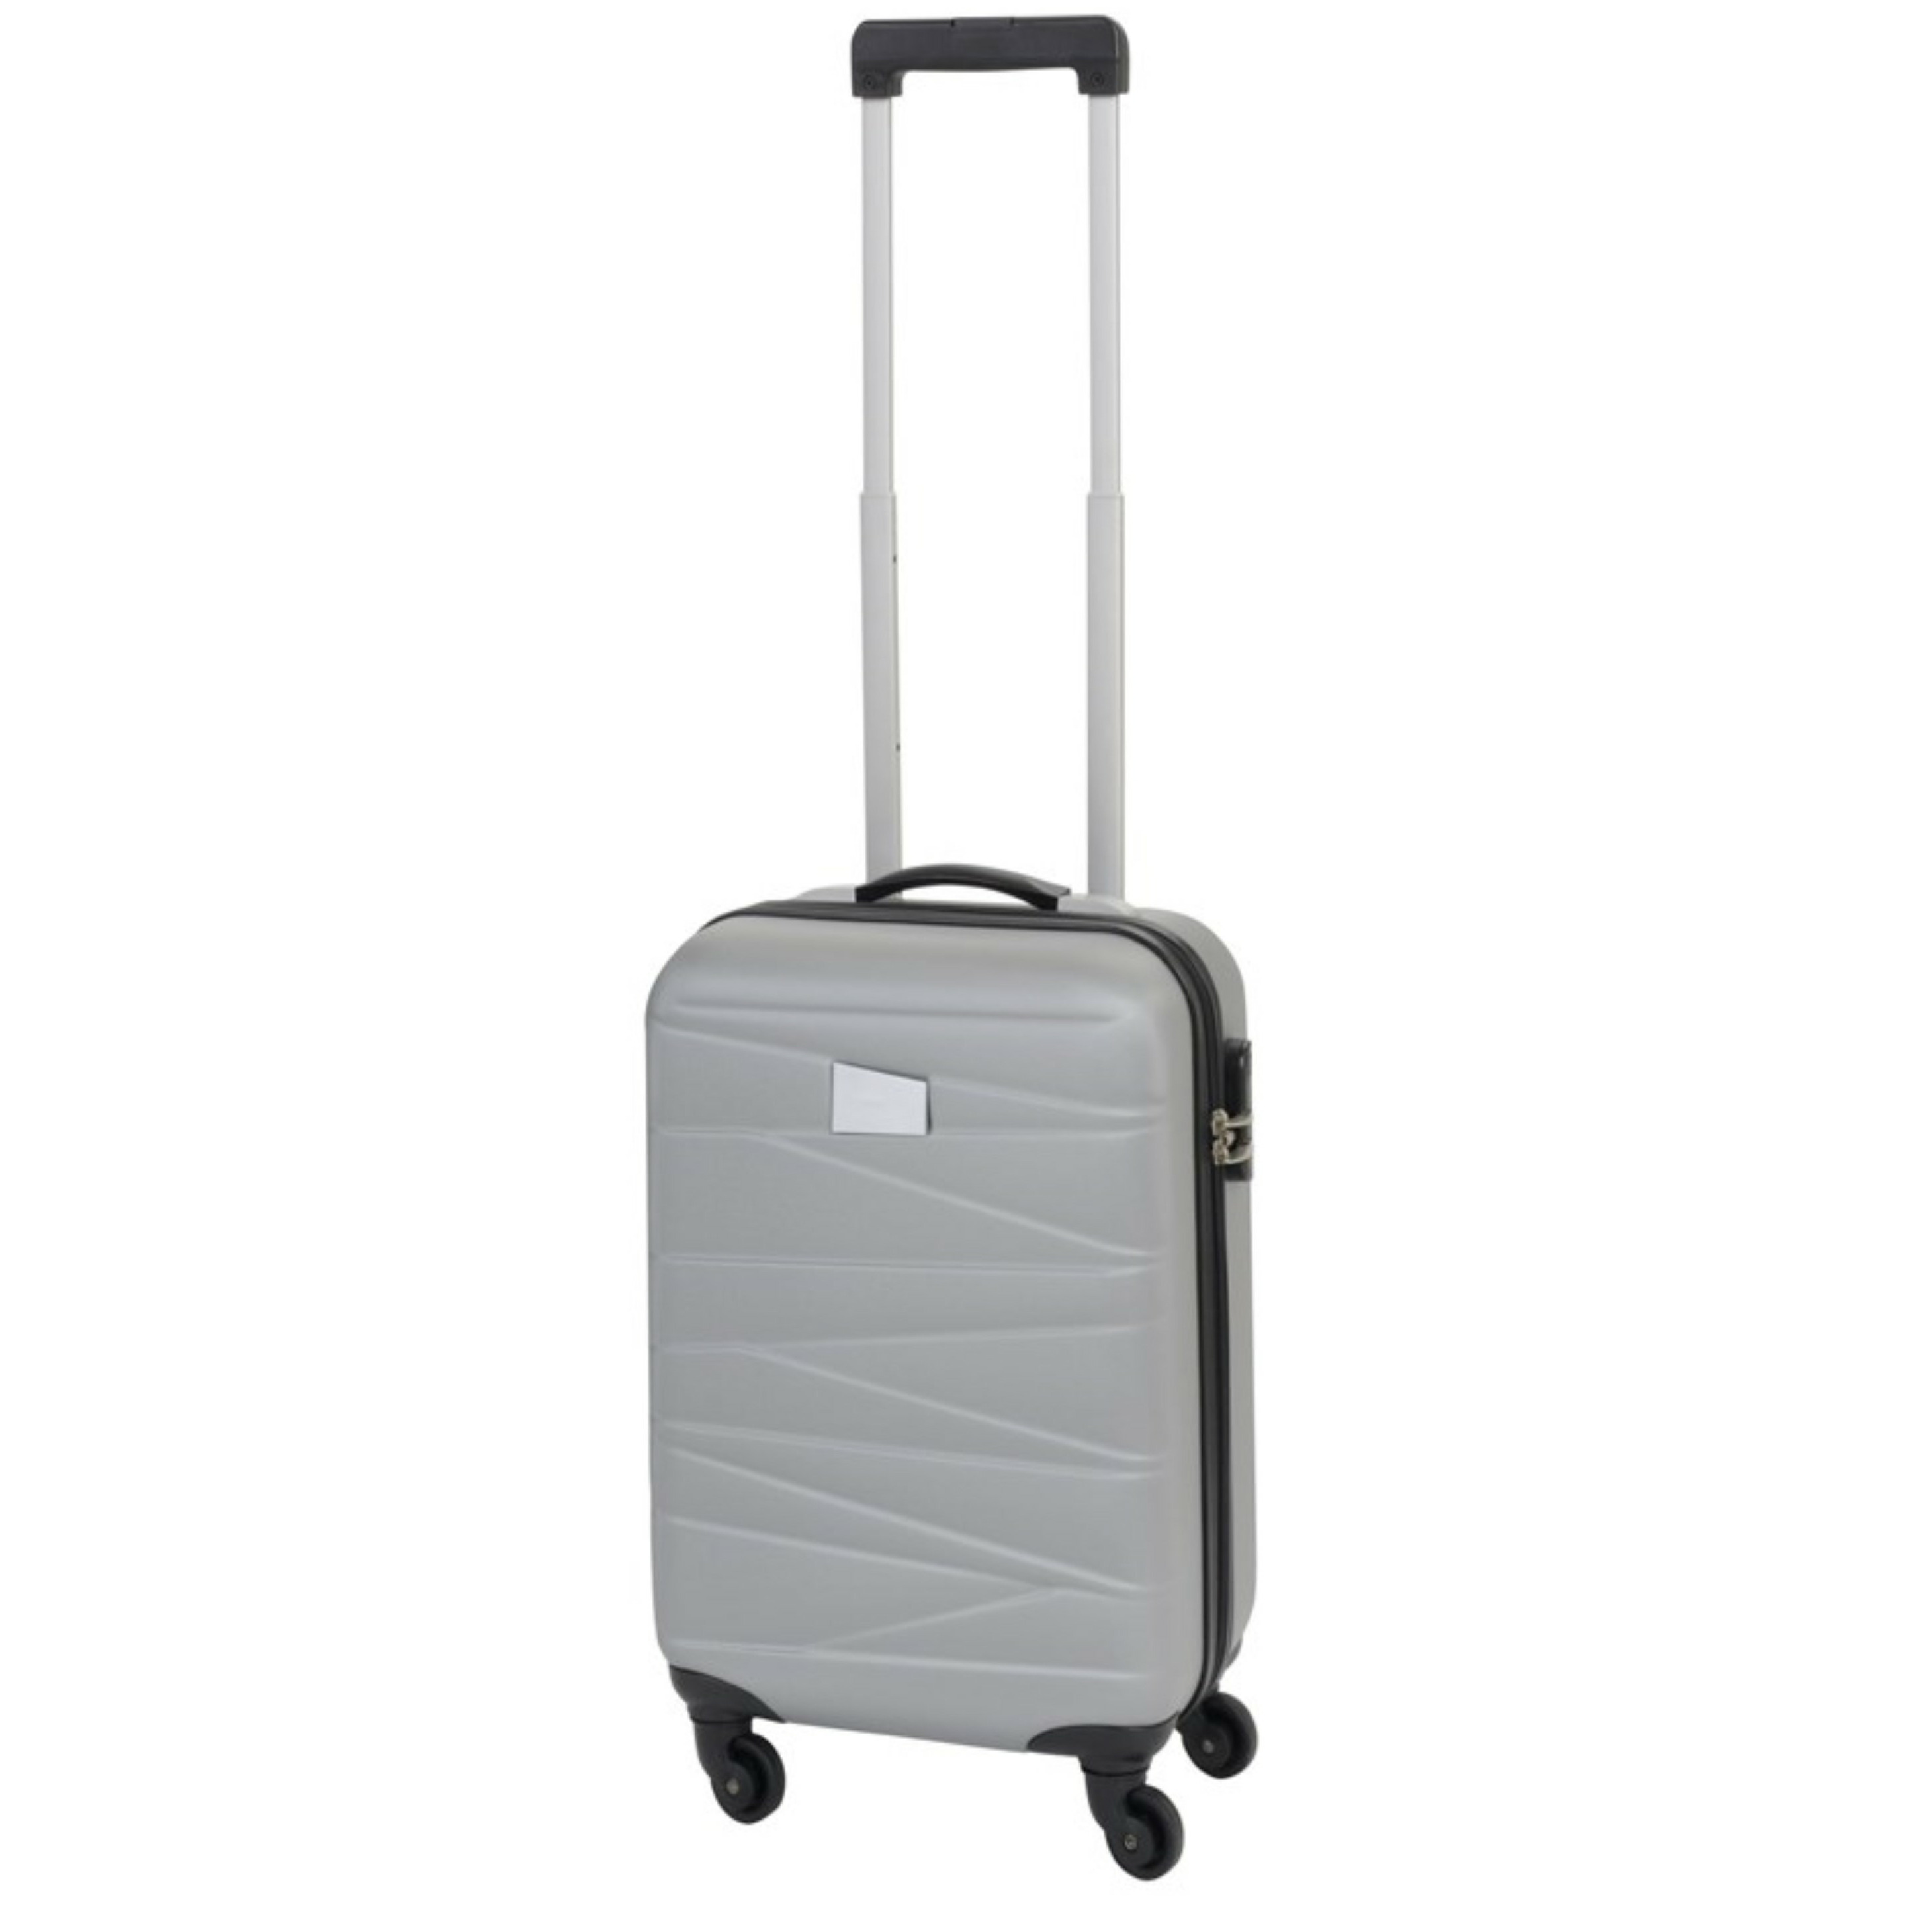 Cabine handbagage reis trolley koffer met zwenkwielen 55 x 35 x 20 cm grijs